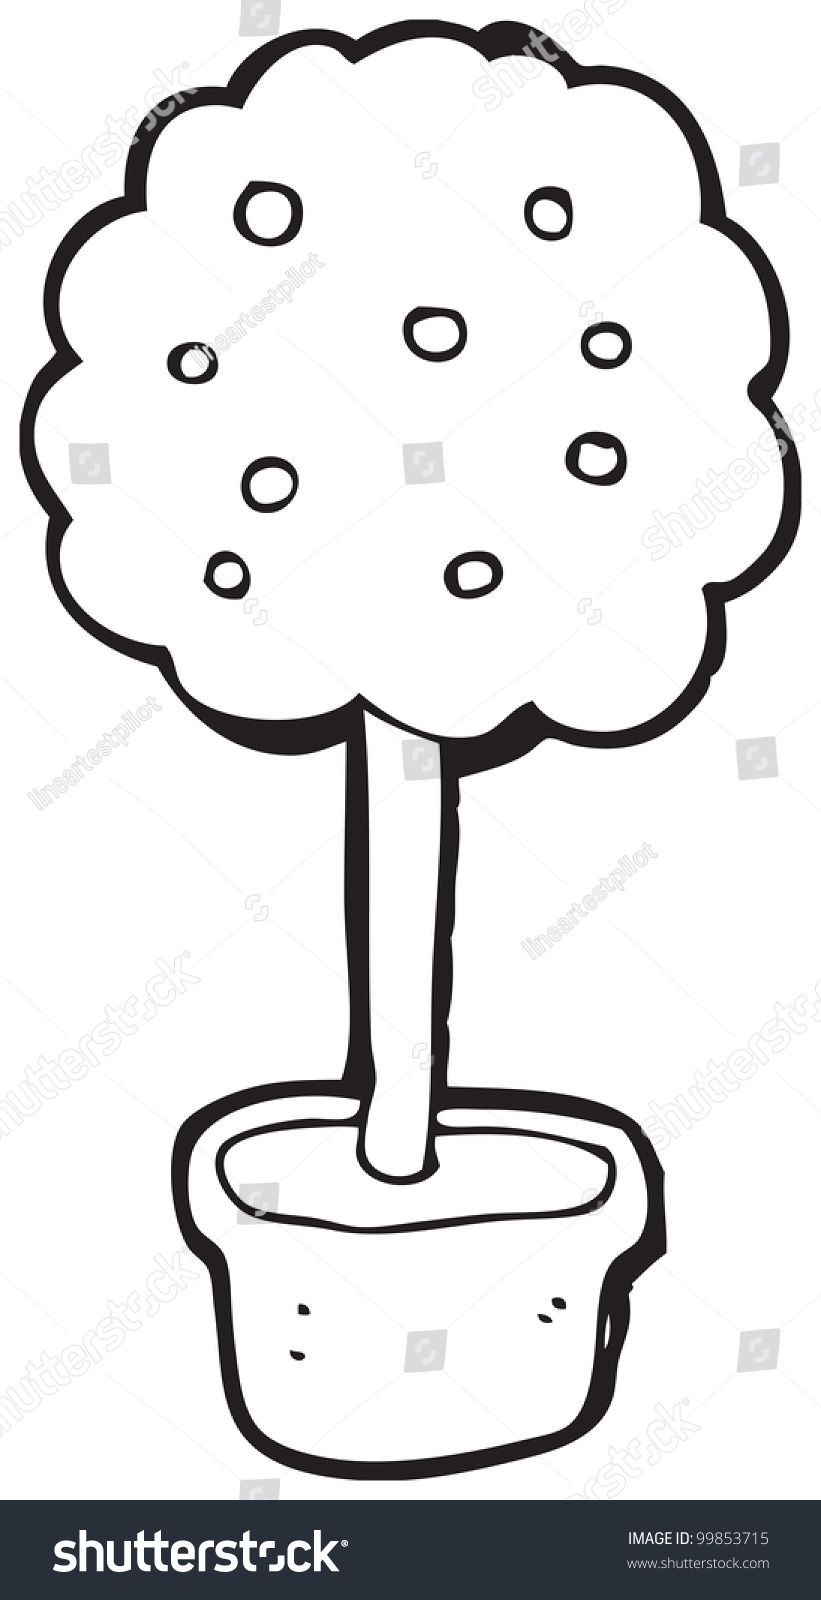 Cartoon Potted Tree Stock Photo 99853715 : Shutterstock